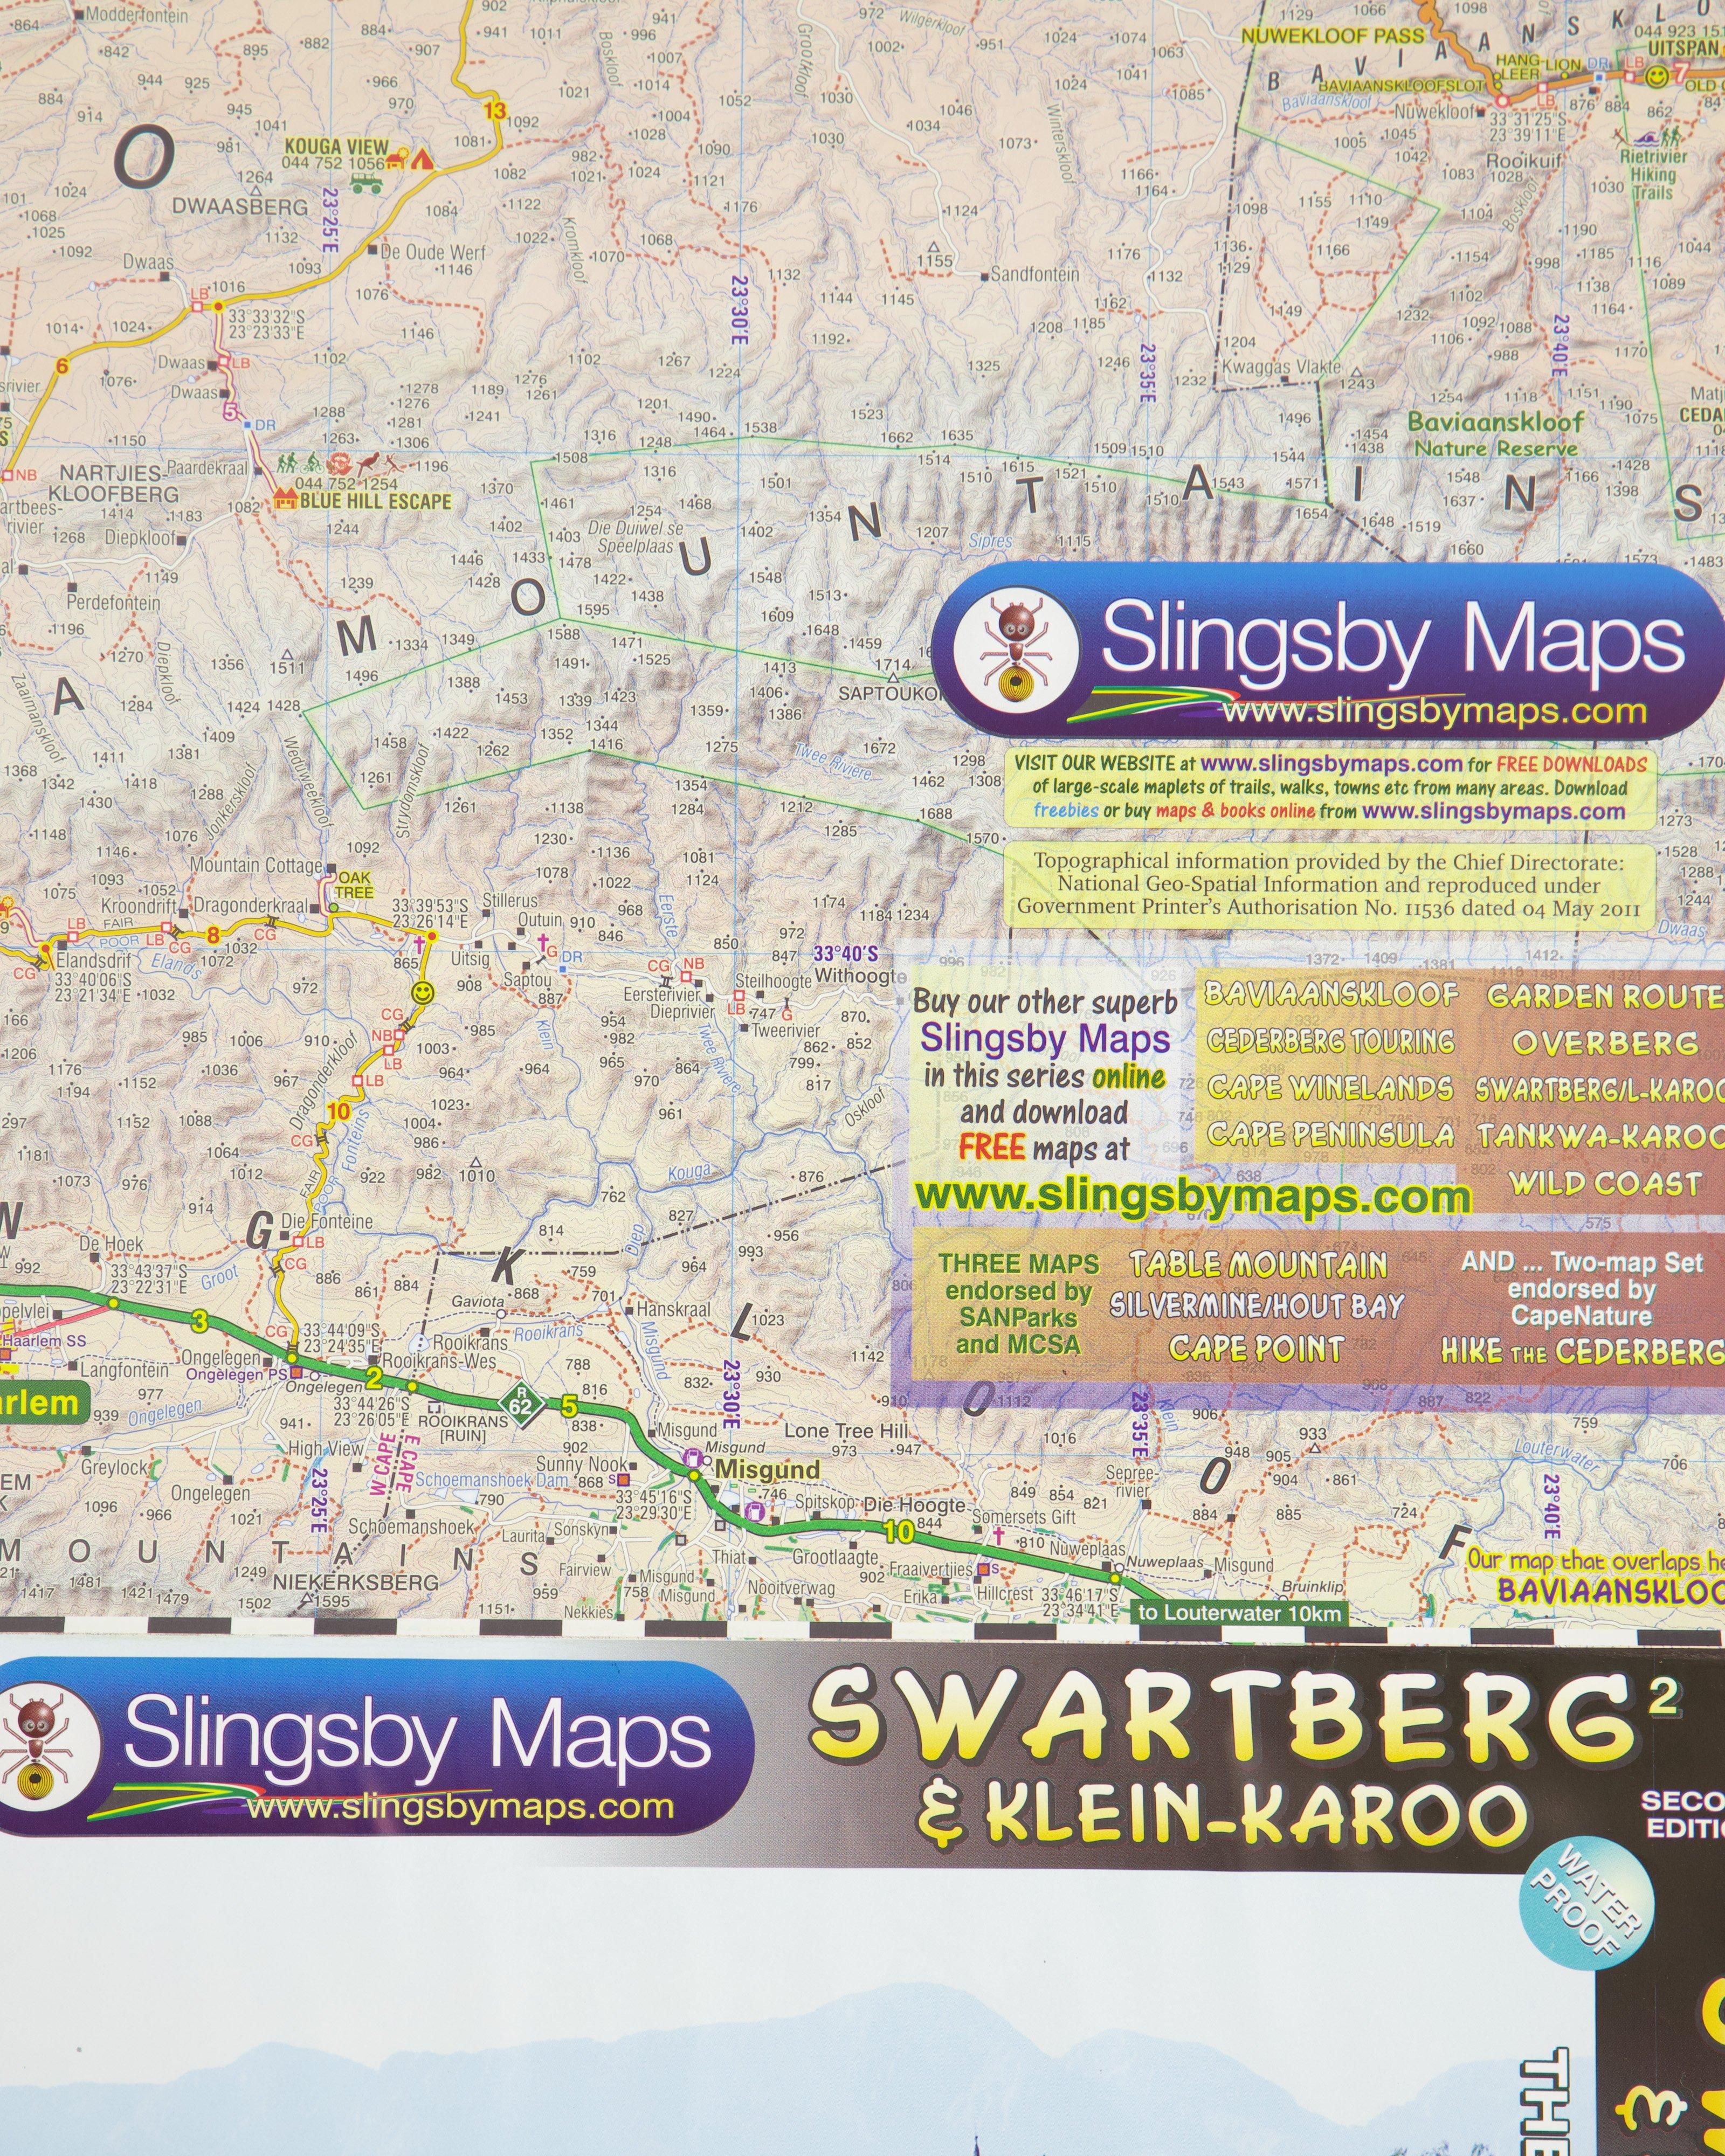  Swartberg & Klein Karoo Waterproof #2 Map -  No Colour